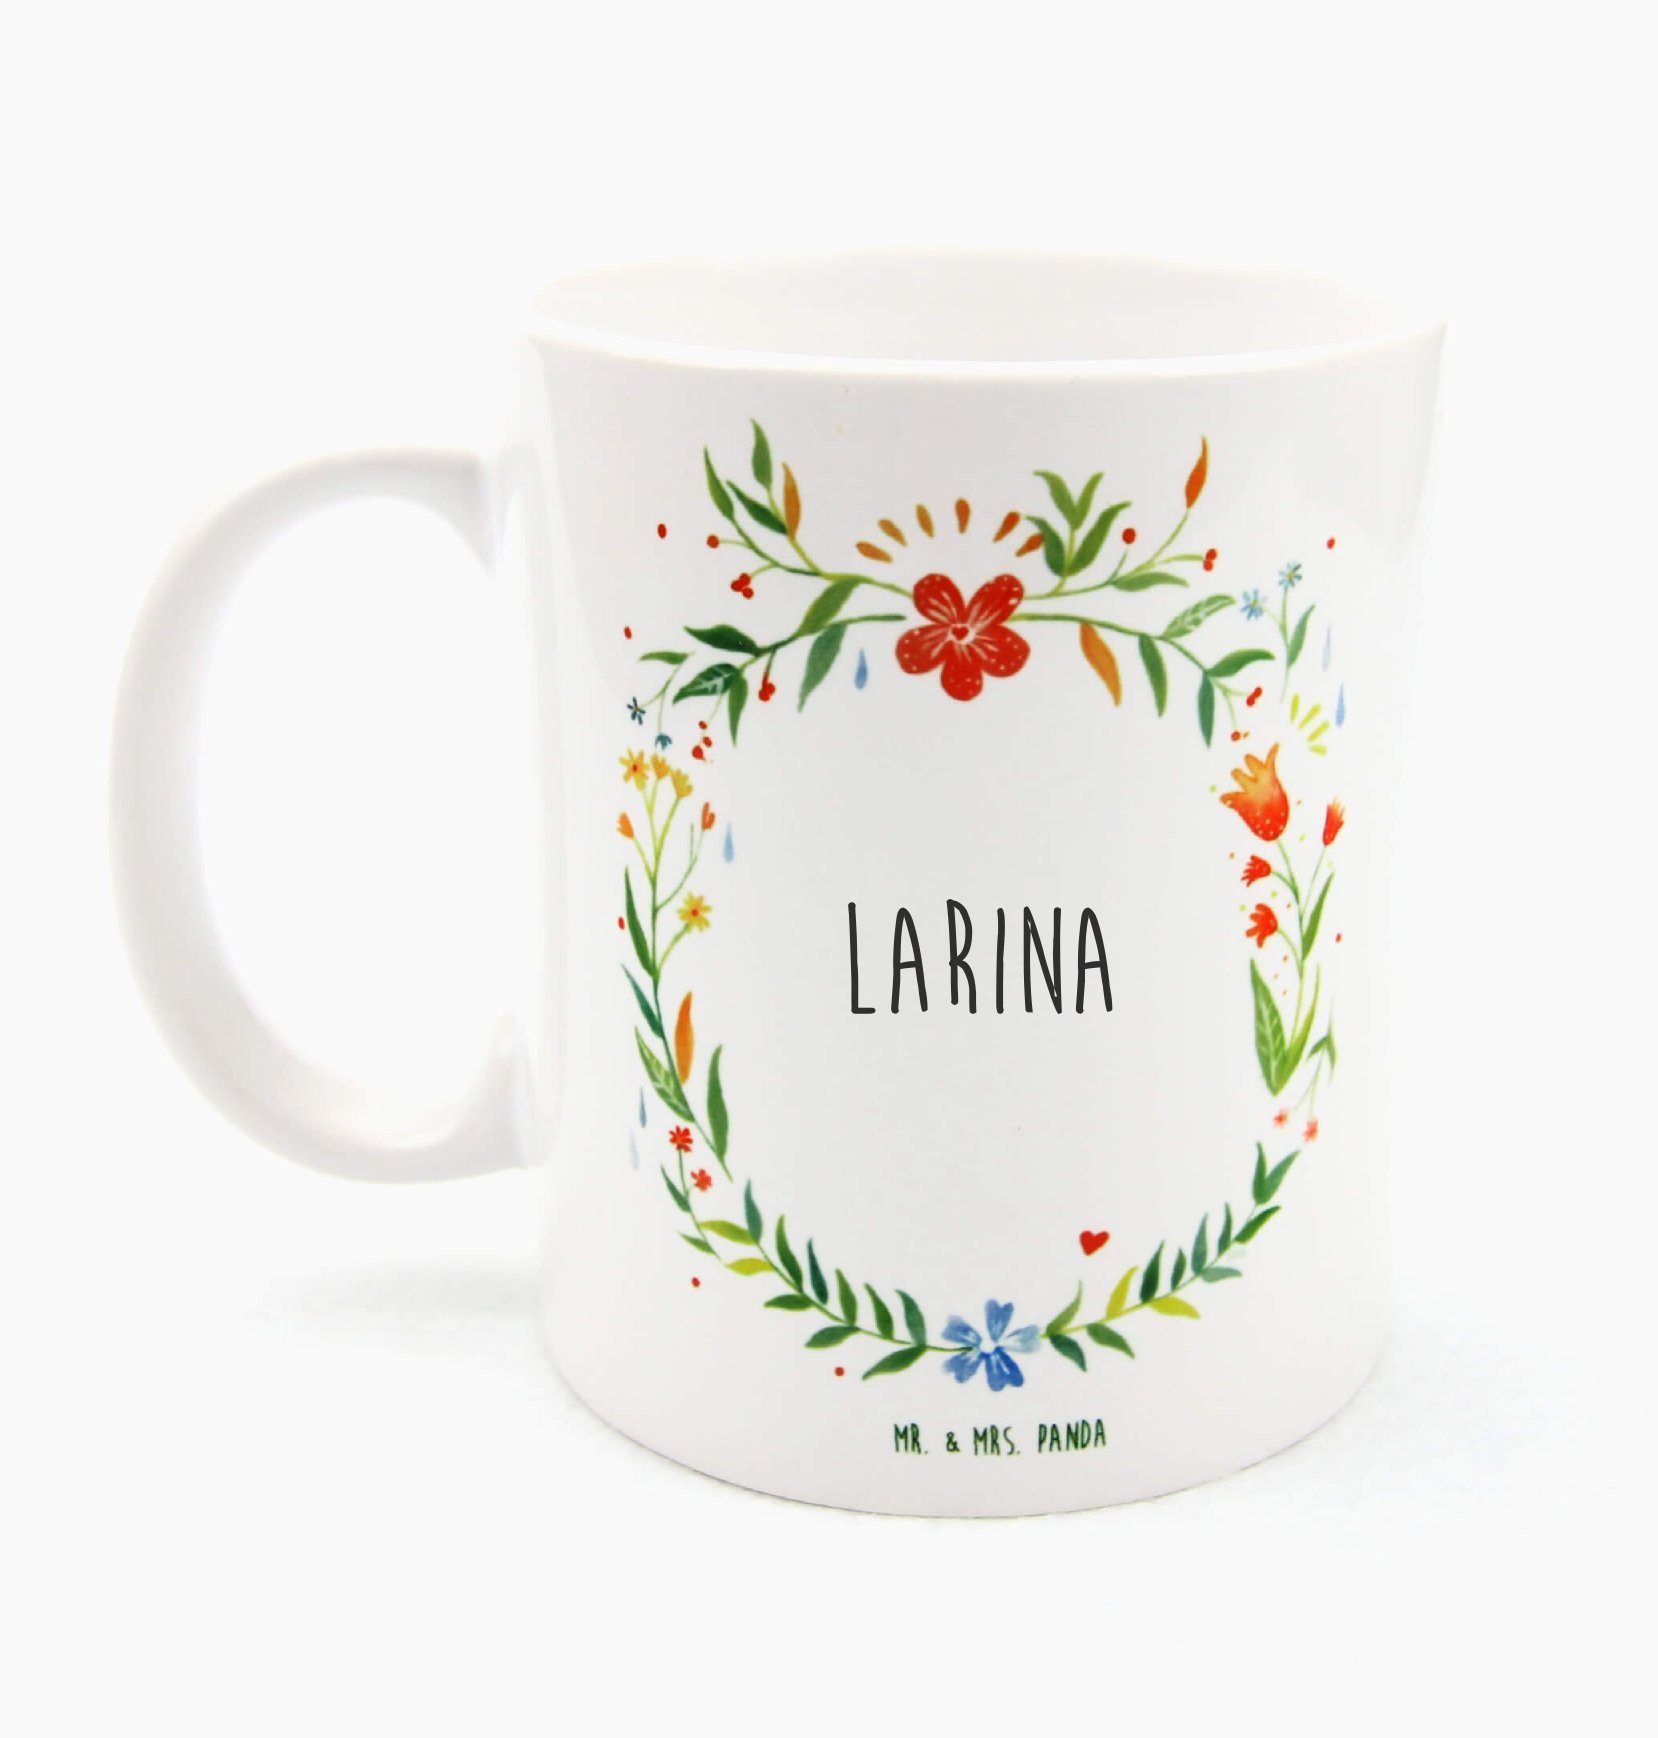 Motive, Larina & Geschenk, Keramik Mr. Becher, Mrs. Panda Tasse Tasse Kaffeebecher, - Keramiktasse,